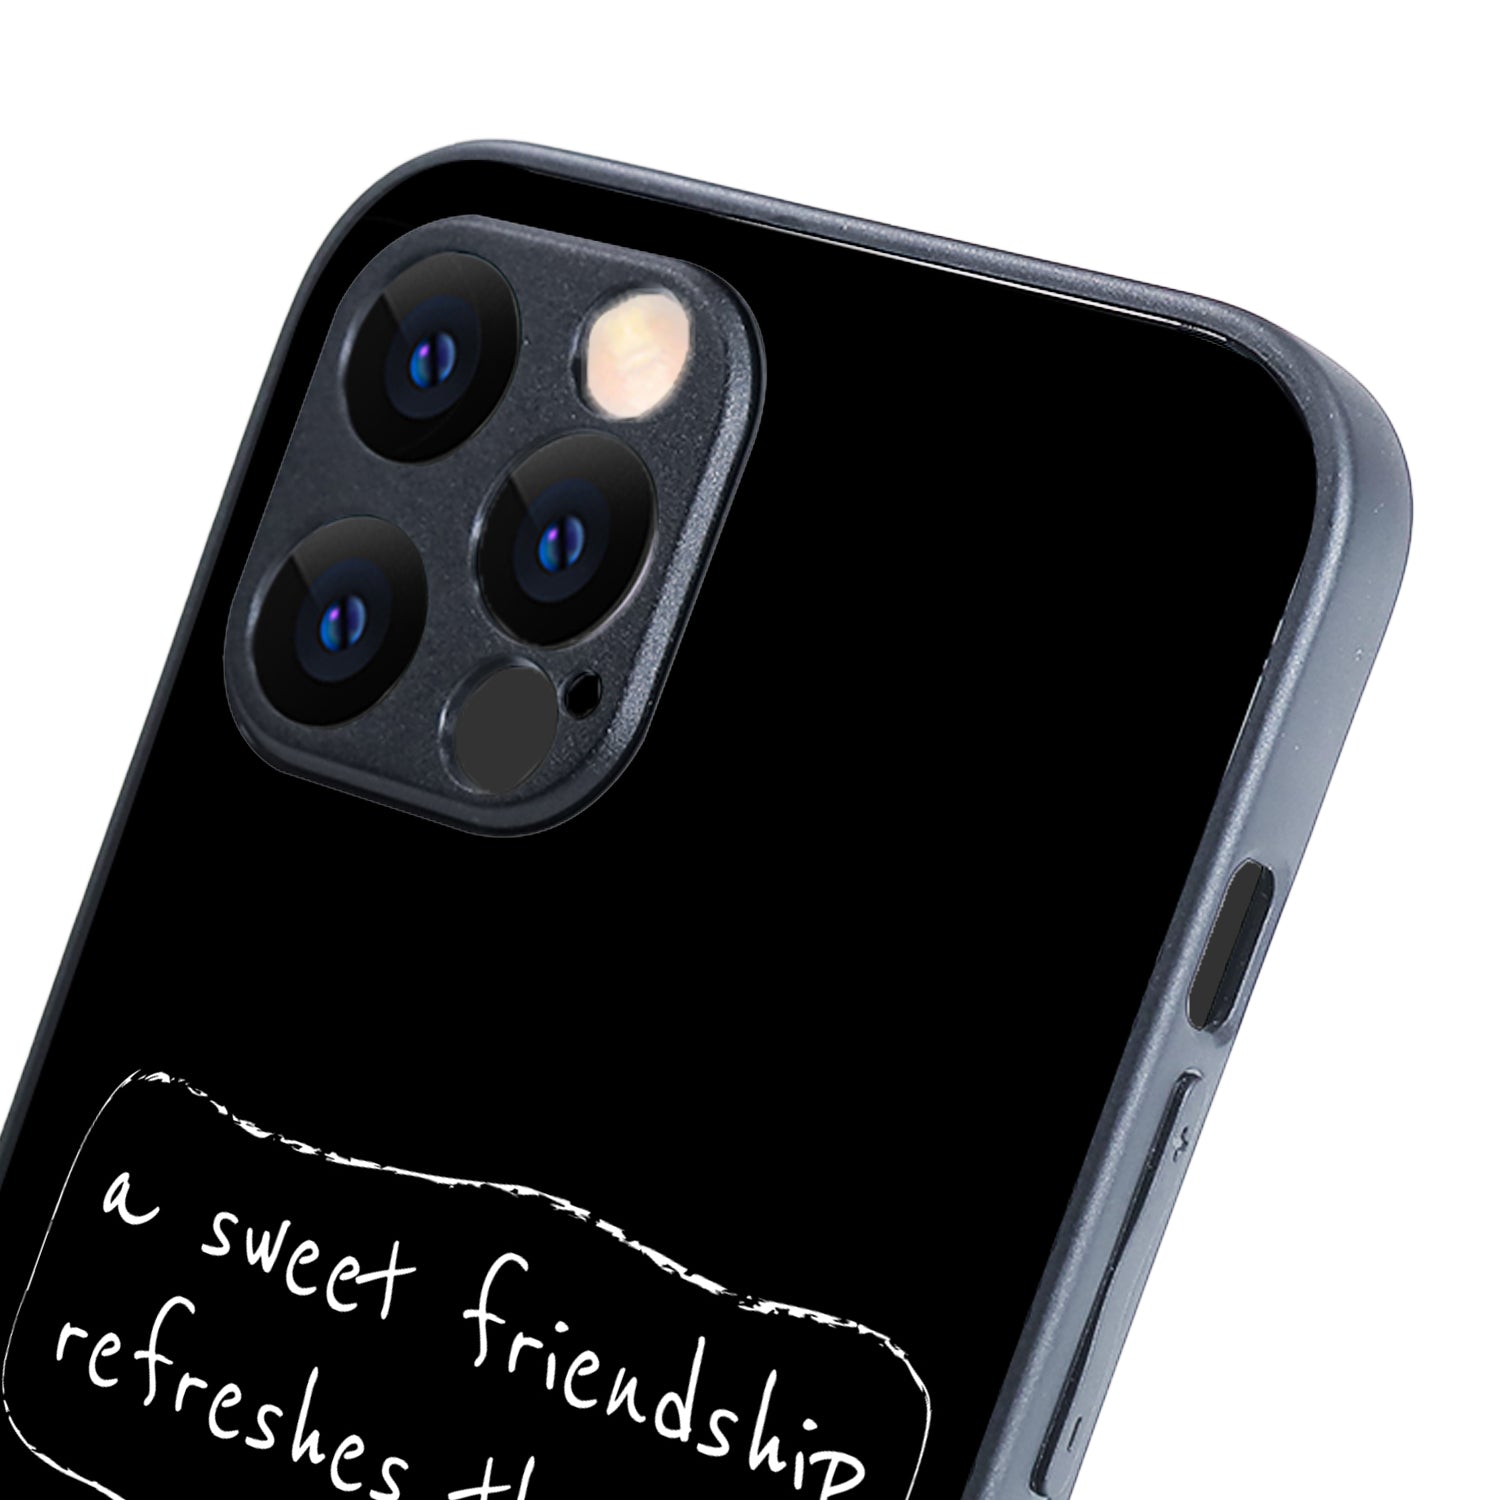 Sweet Friend Soul Bff iPhone 12 Pro Max Case